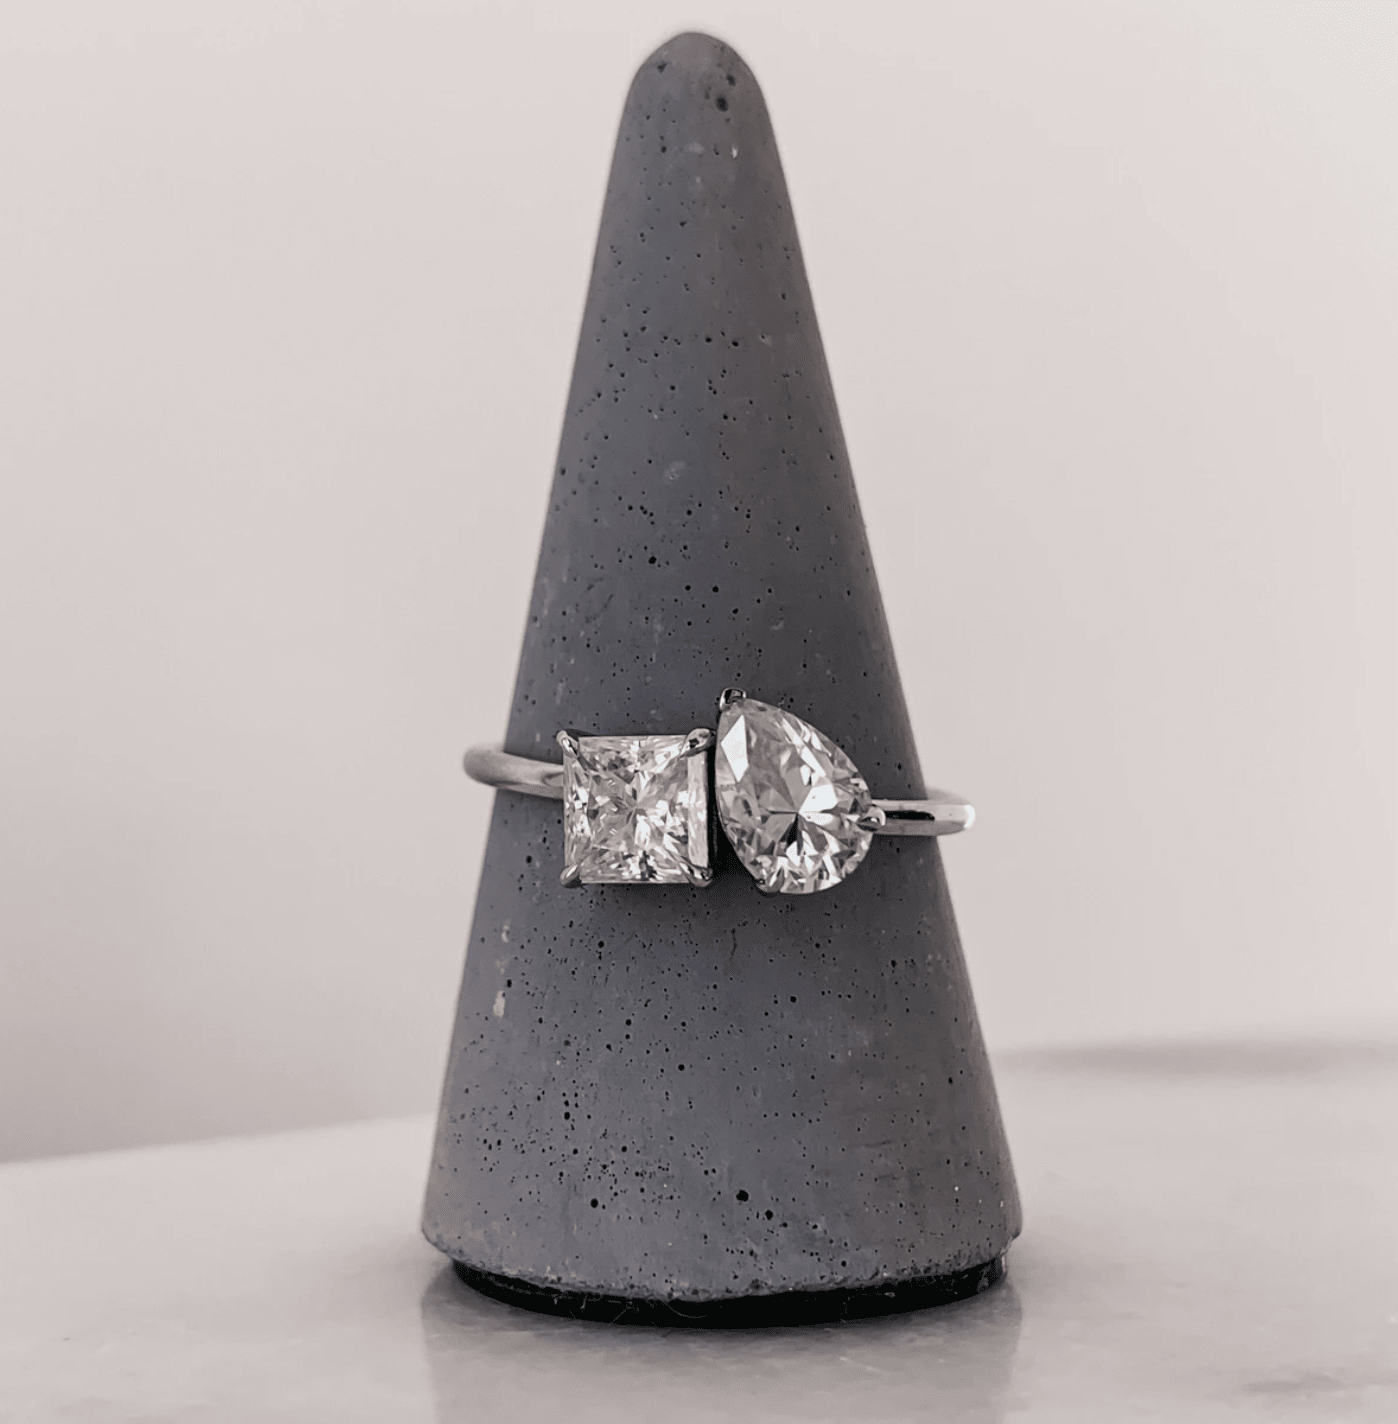 Diamond Ring Design 2021 | escapeauthority.com